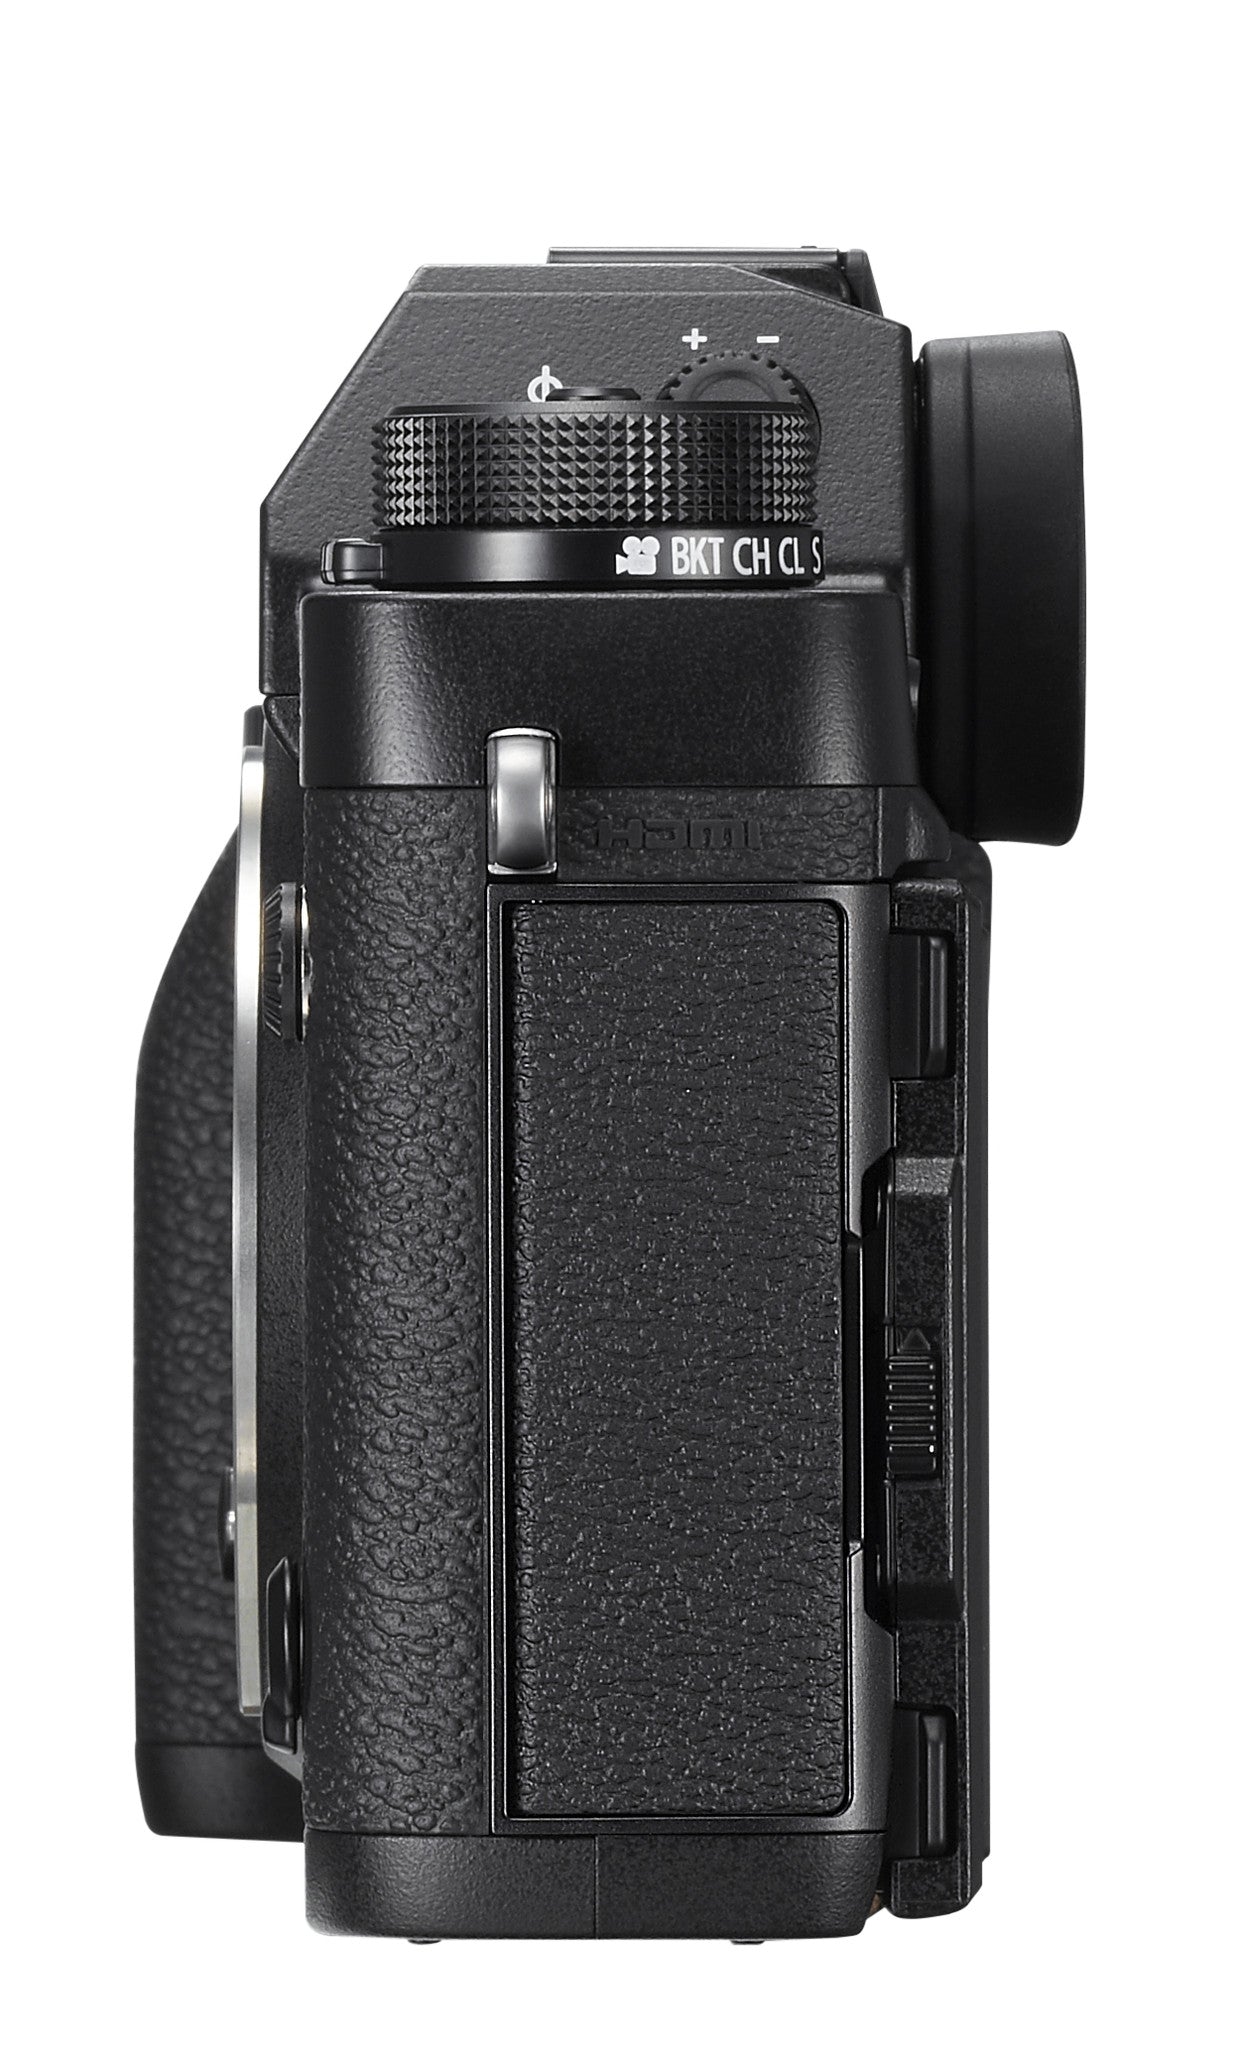 Fujifilm X-T2 Digital Camera w/ 18-55mm Lens Kit (Black), camera mirrorless cameras, Fujifilm - Pictureline  - 7